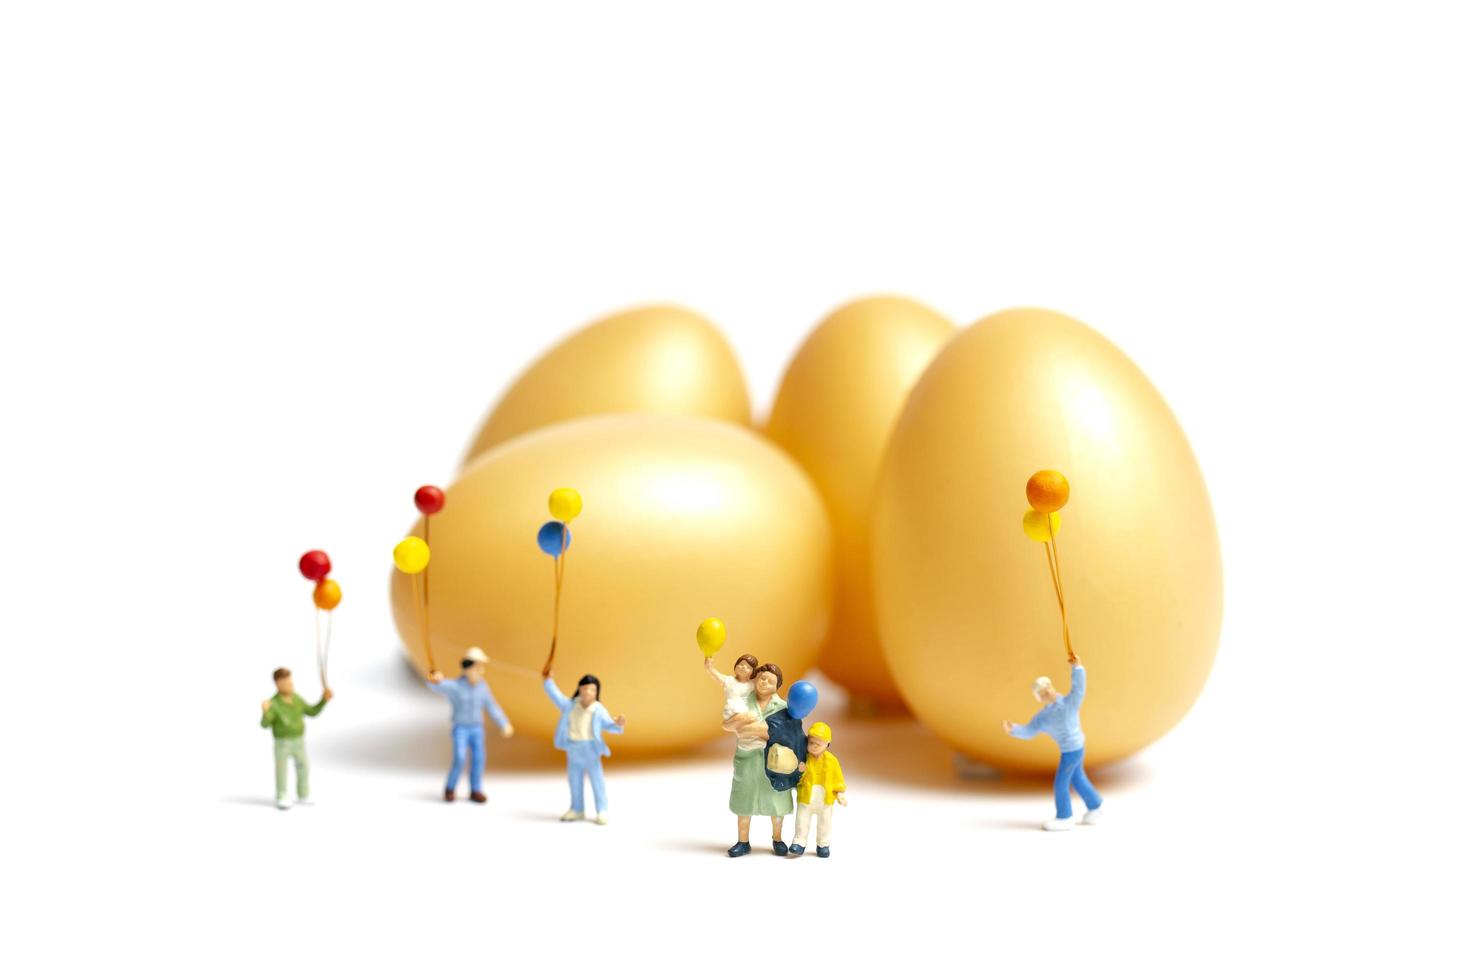 Gente en miniatura sosteniendo globos celebrando la Pascua sobre un fondo blanco. foto